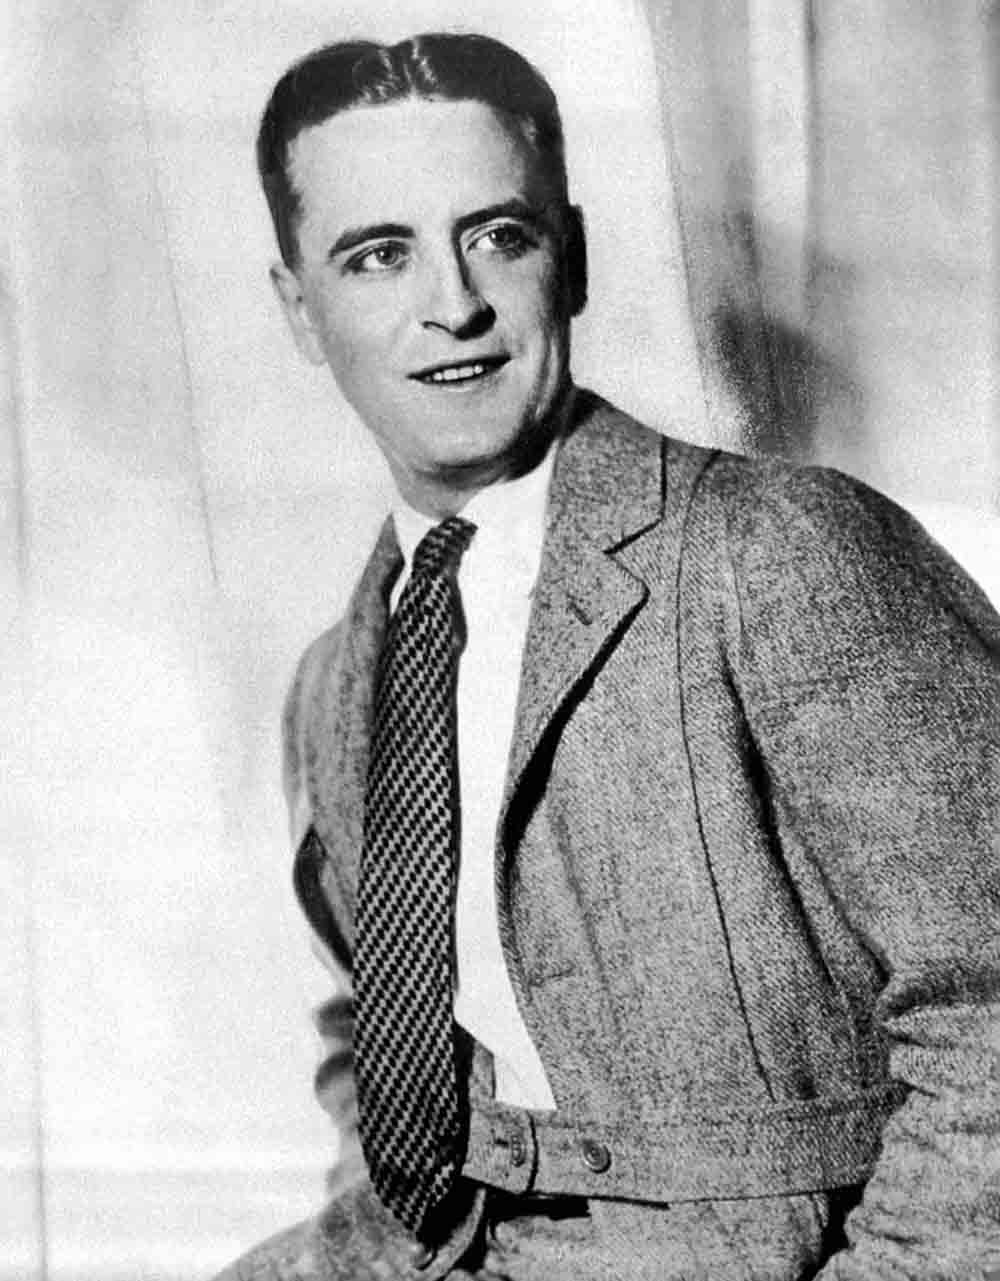 F Scott Fitzgerald photograph 1923